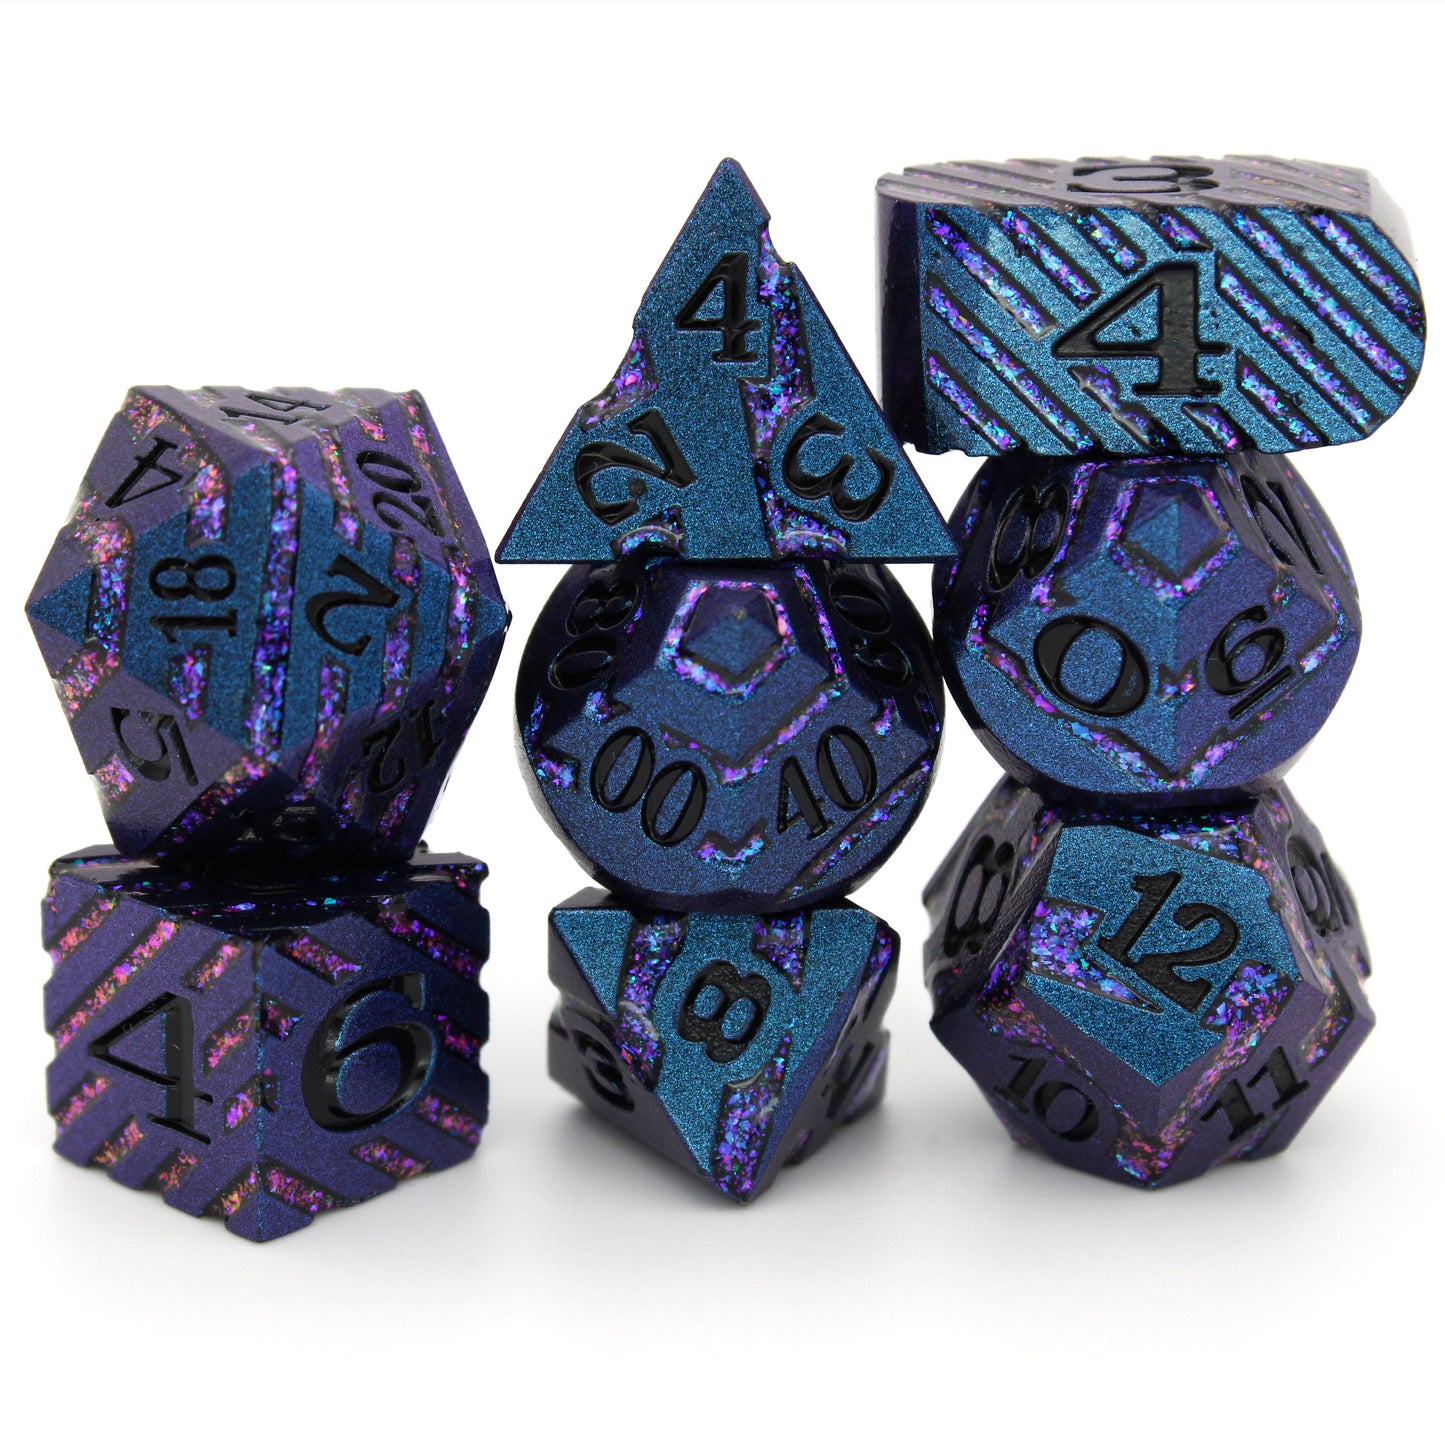 Midnight Mischief is an 8-piece dark blue metal set banded in a wraparound enamel fill of brilliant purple.